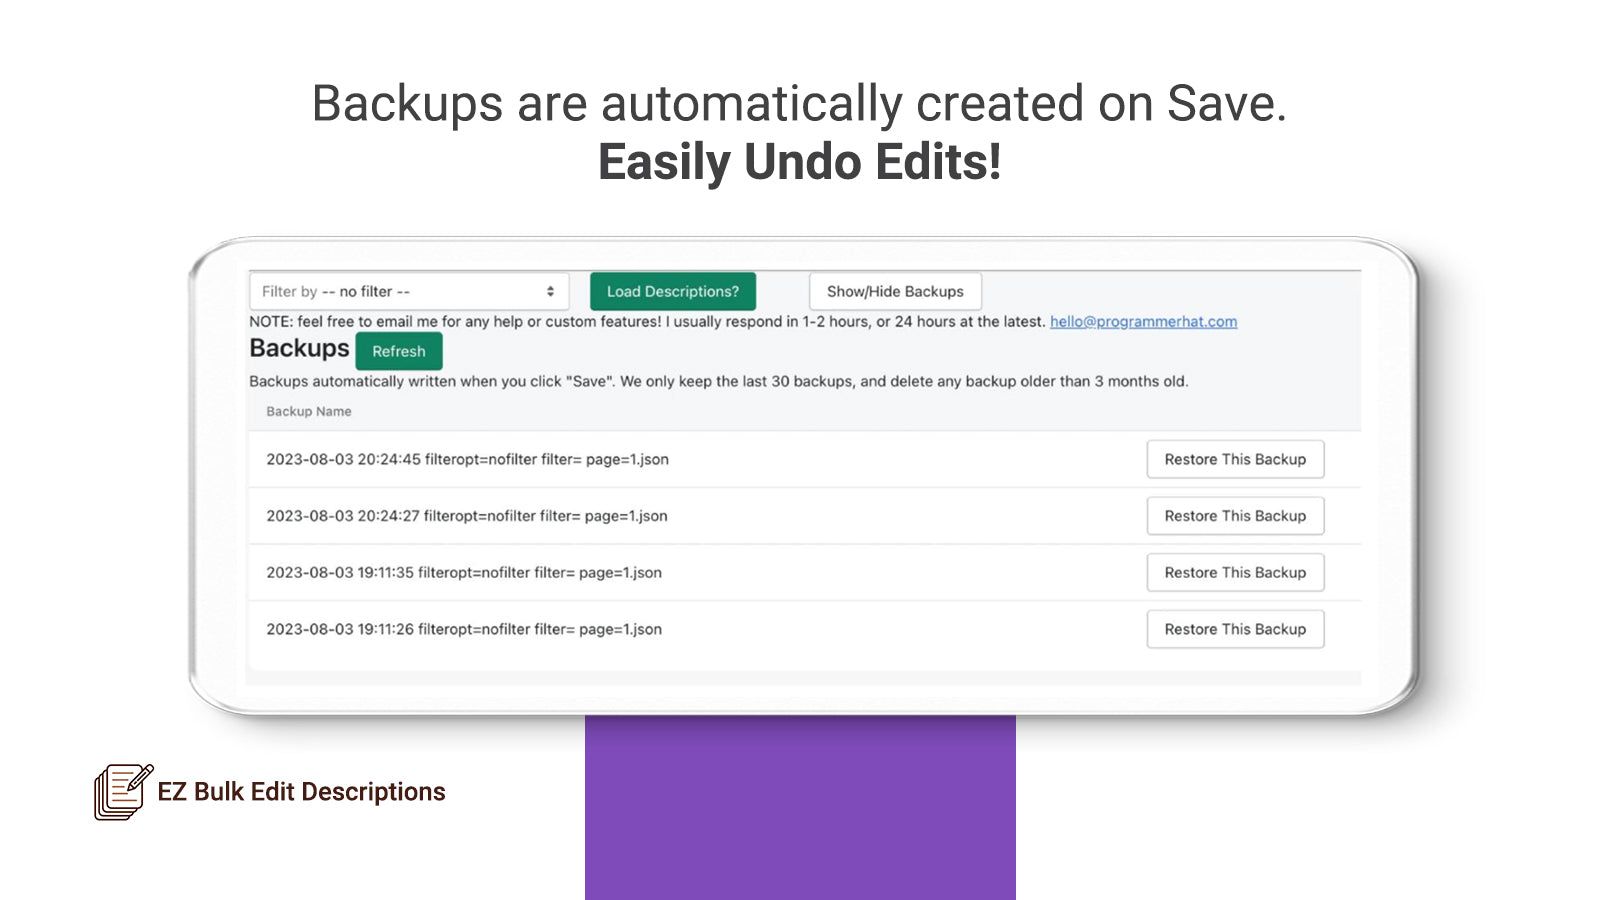 Backups are automatically created on Save. Easily undo edits!